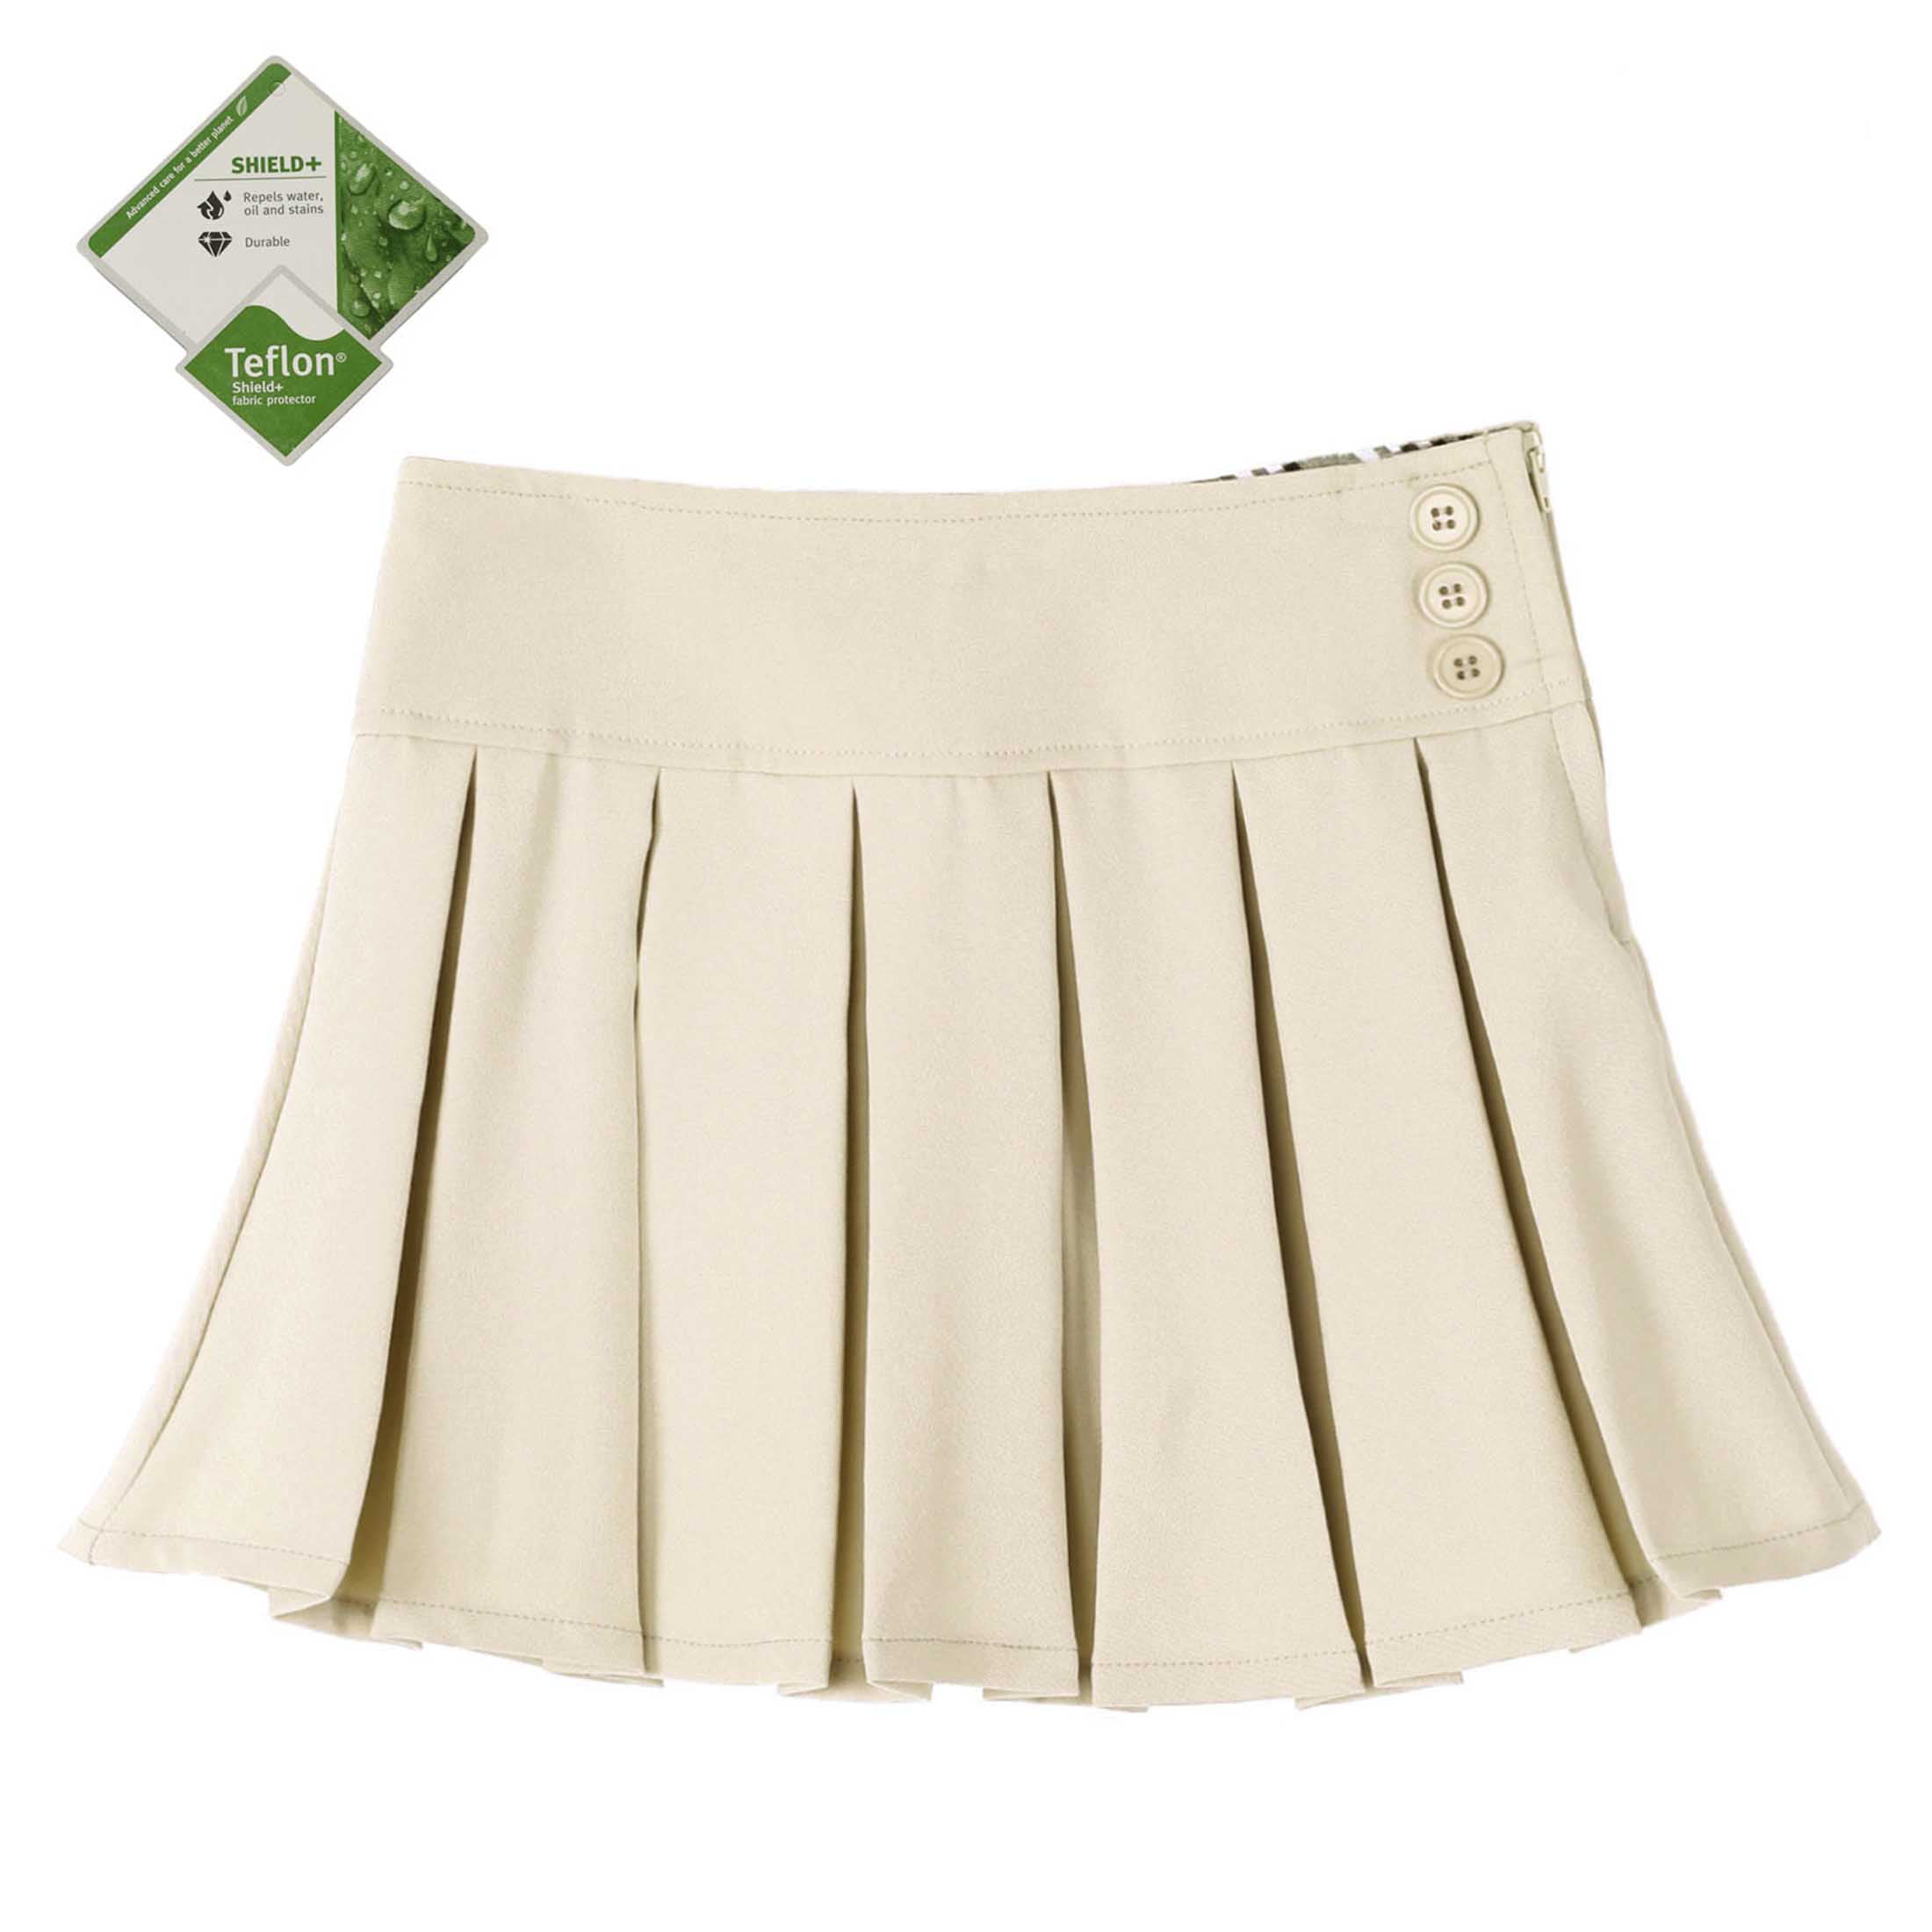 Bienzoe Girls Stretchy Pleated Durable Teflon School Uniform Dance Skirt 